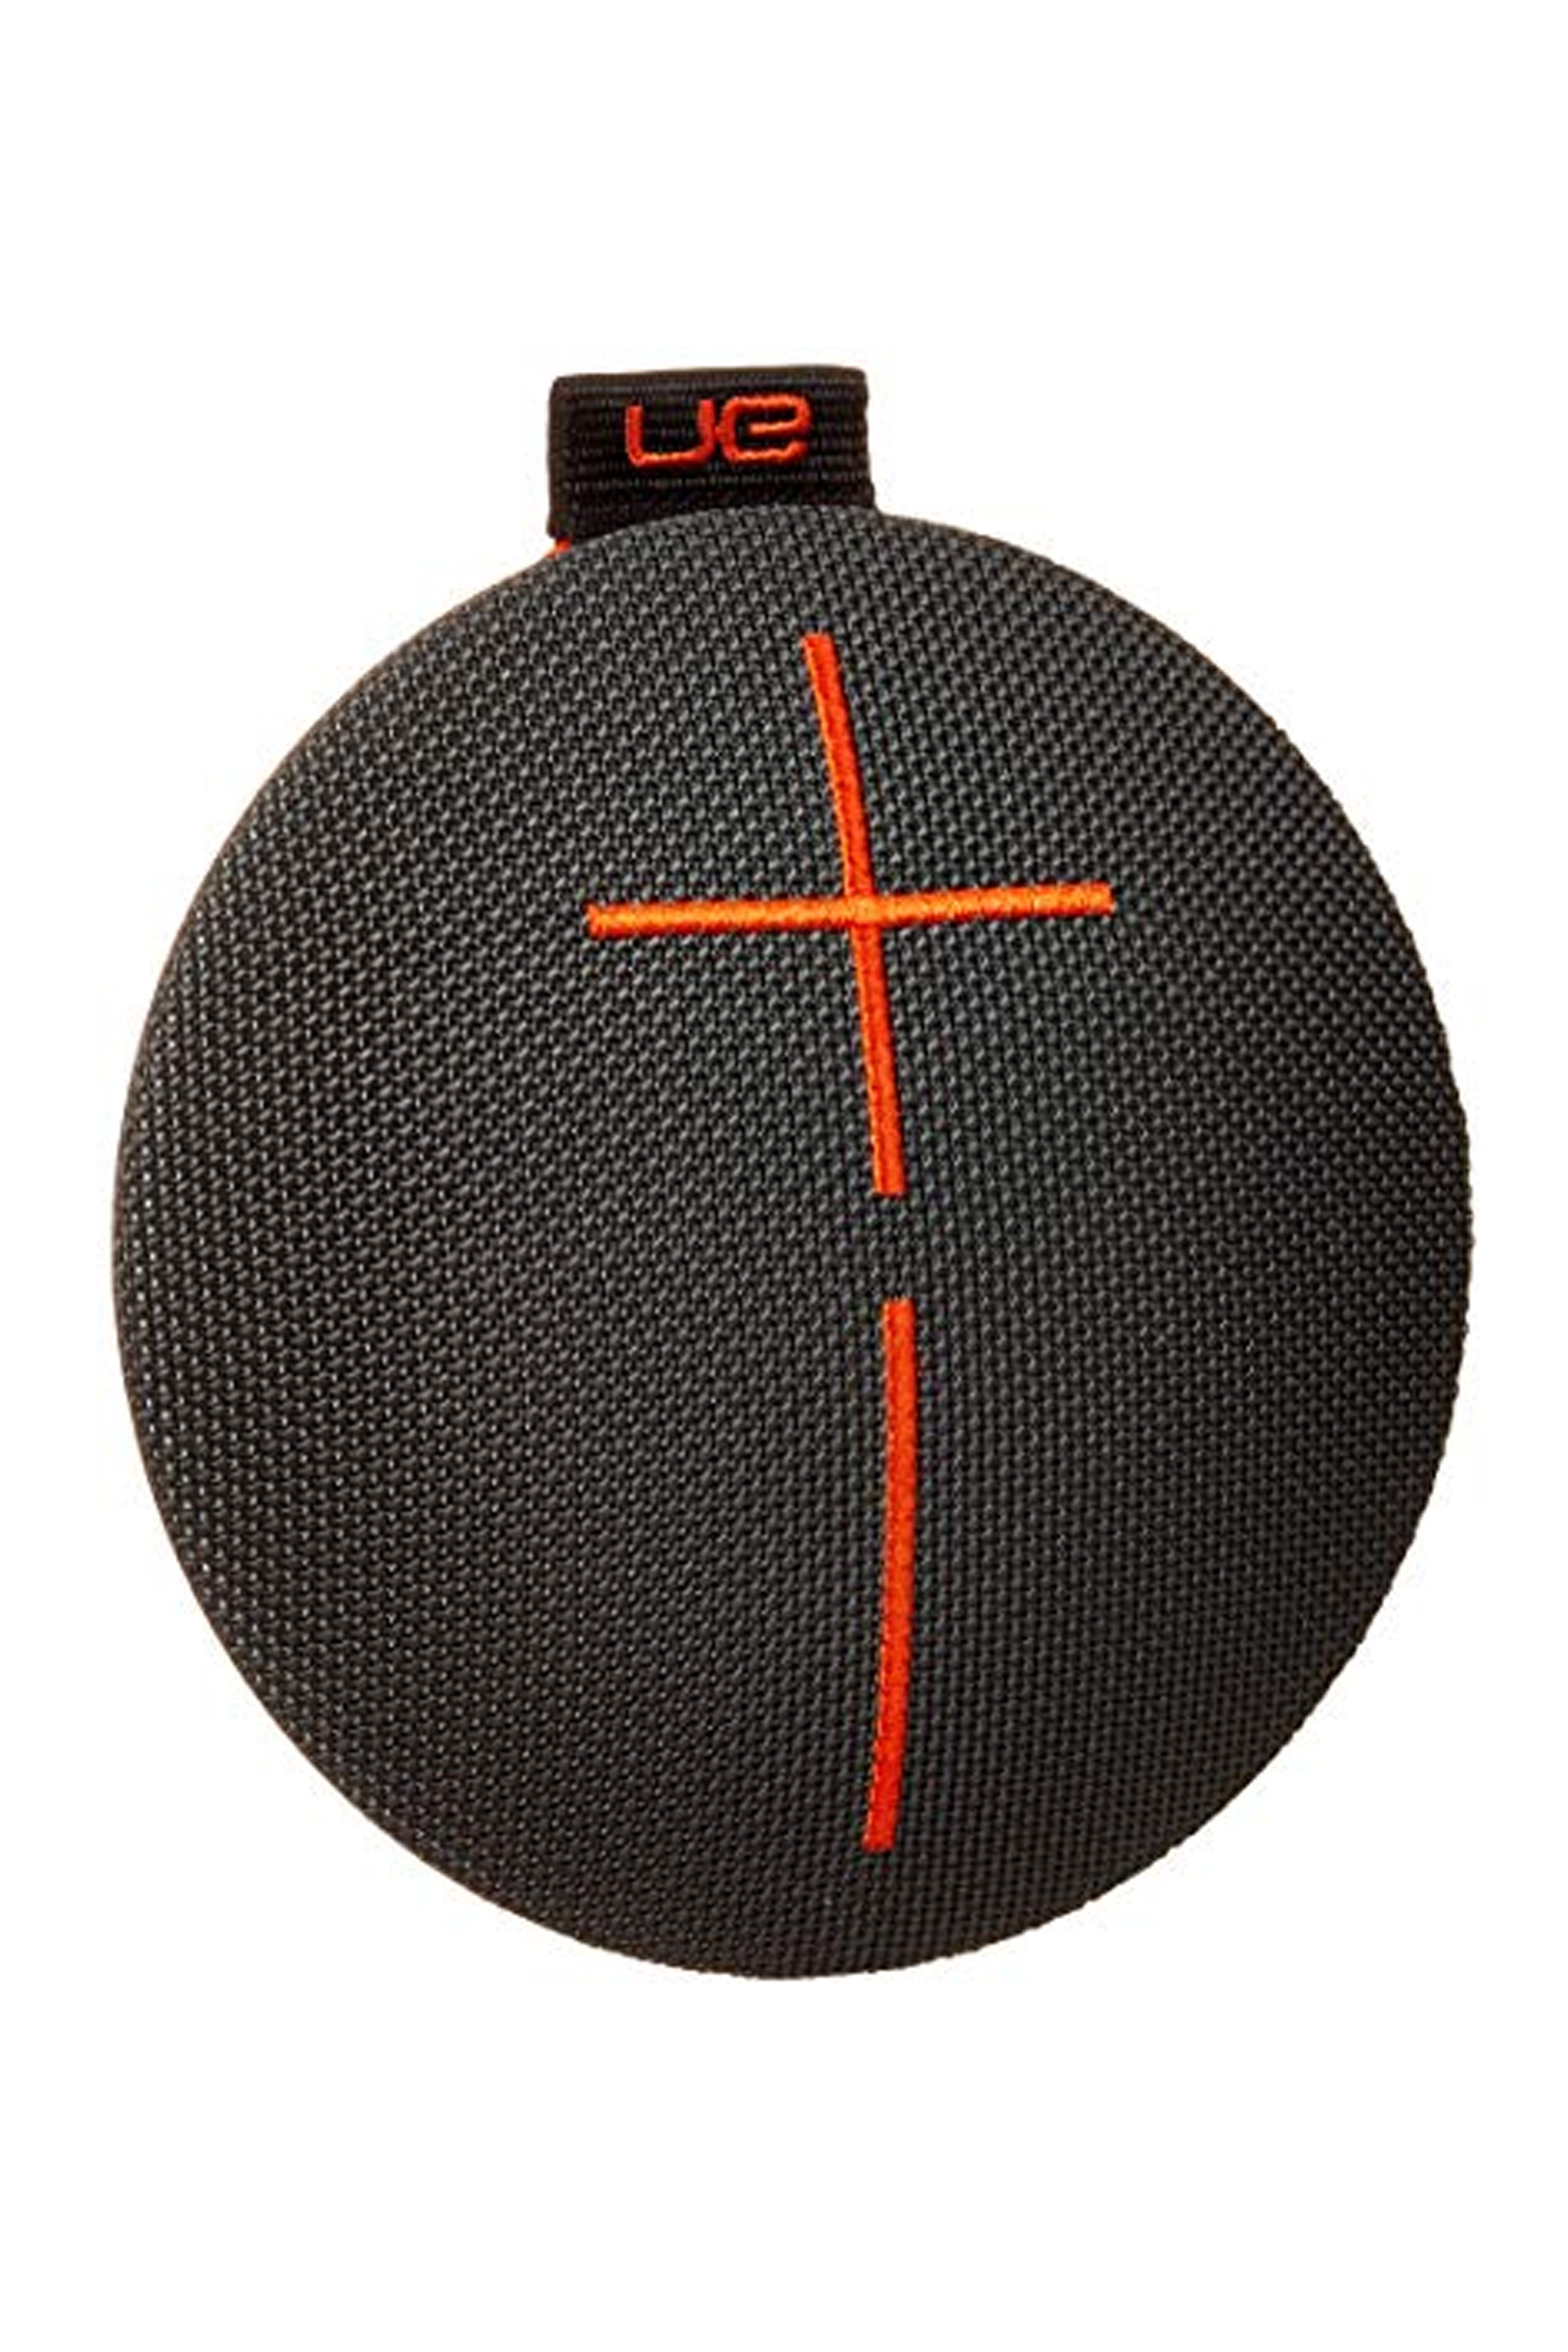 Black Volcano Wireless Bluetooth Speaker